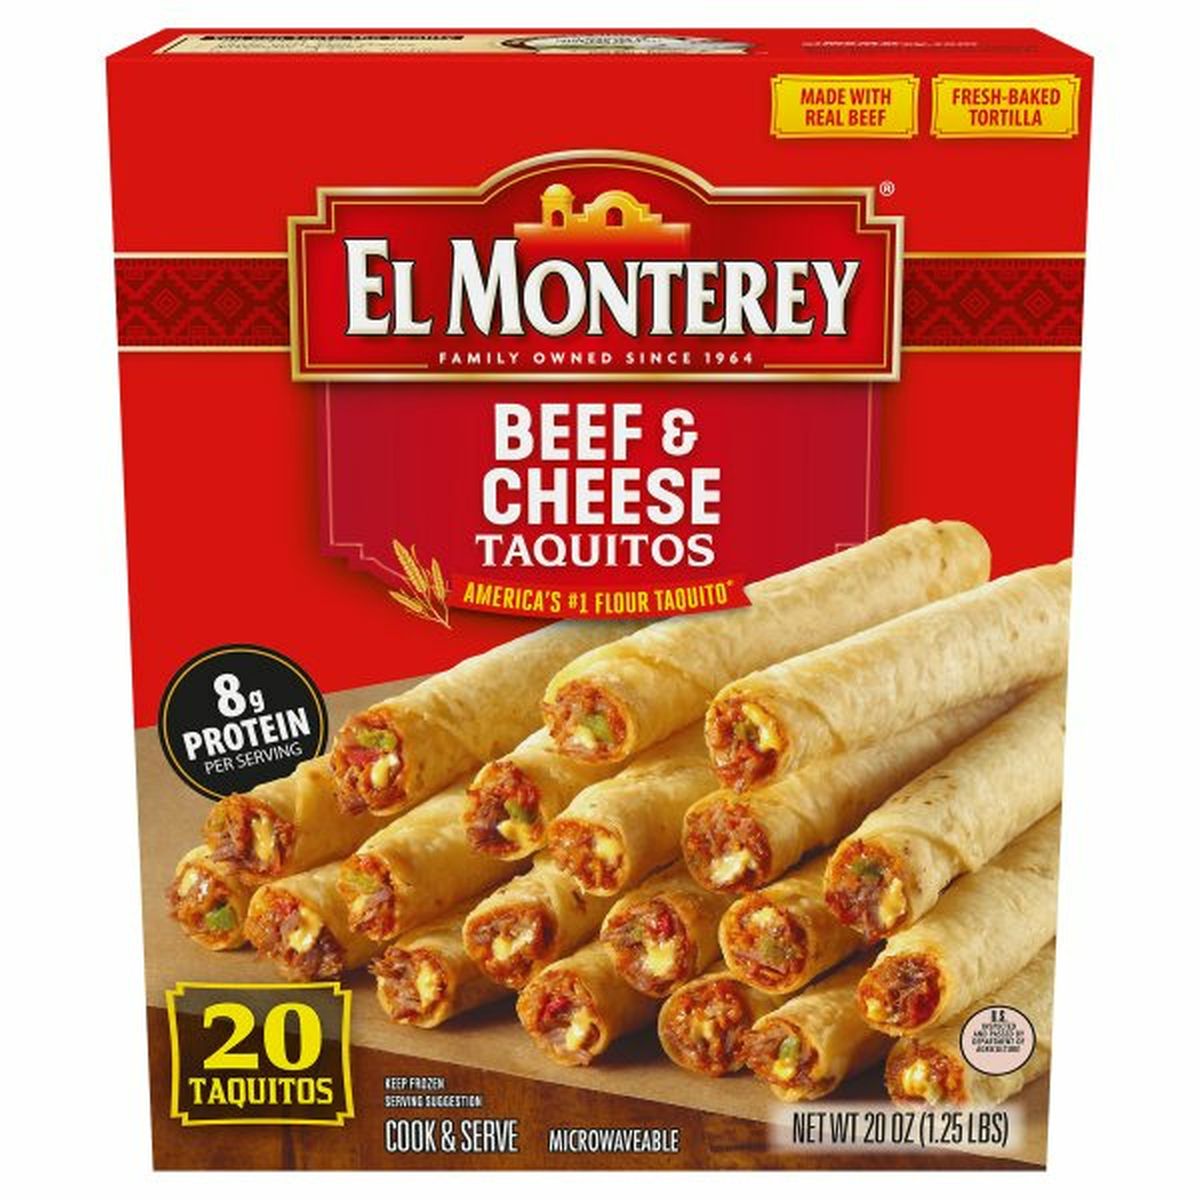 Calories in El Monterey Taquitos, Beef & Cheese